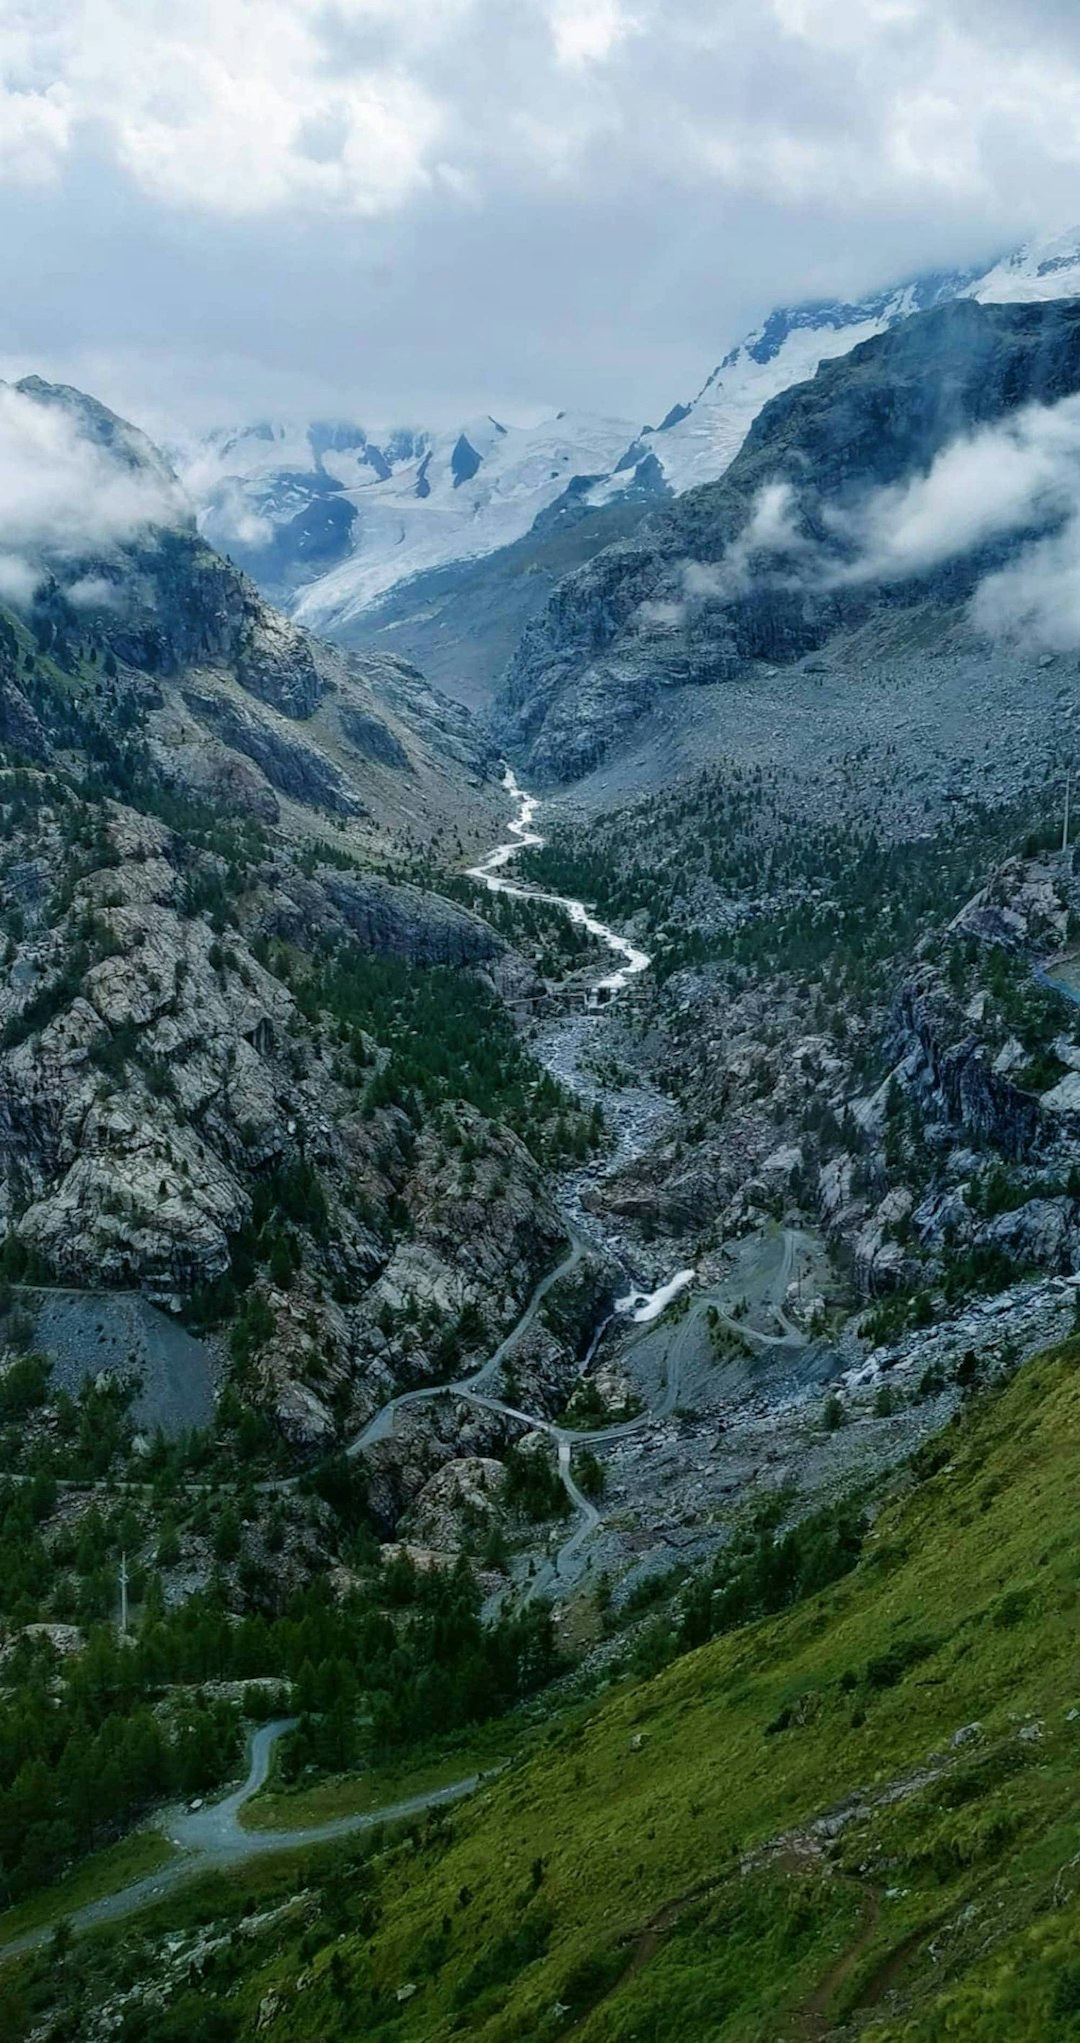 Travel Tips and Stories of Matterhorn Glacier in Switzerland